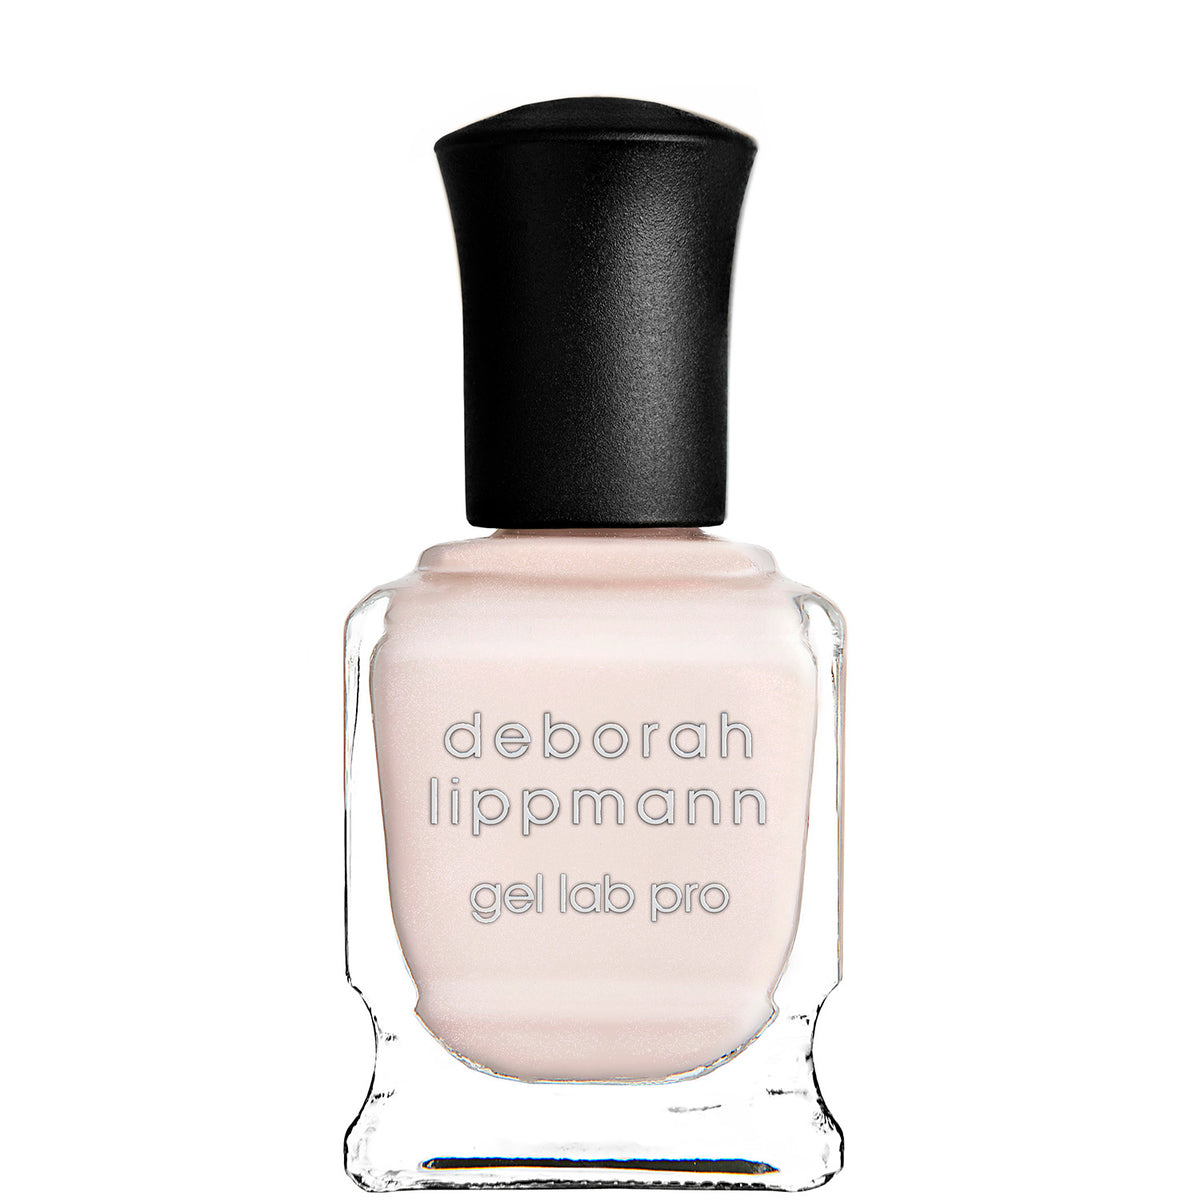 A Fine Romance nail polish - Deborah Lippmann